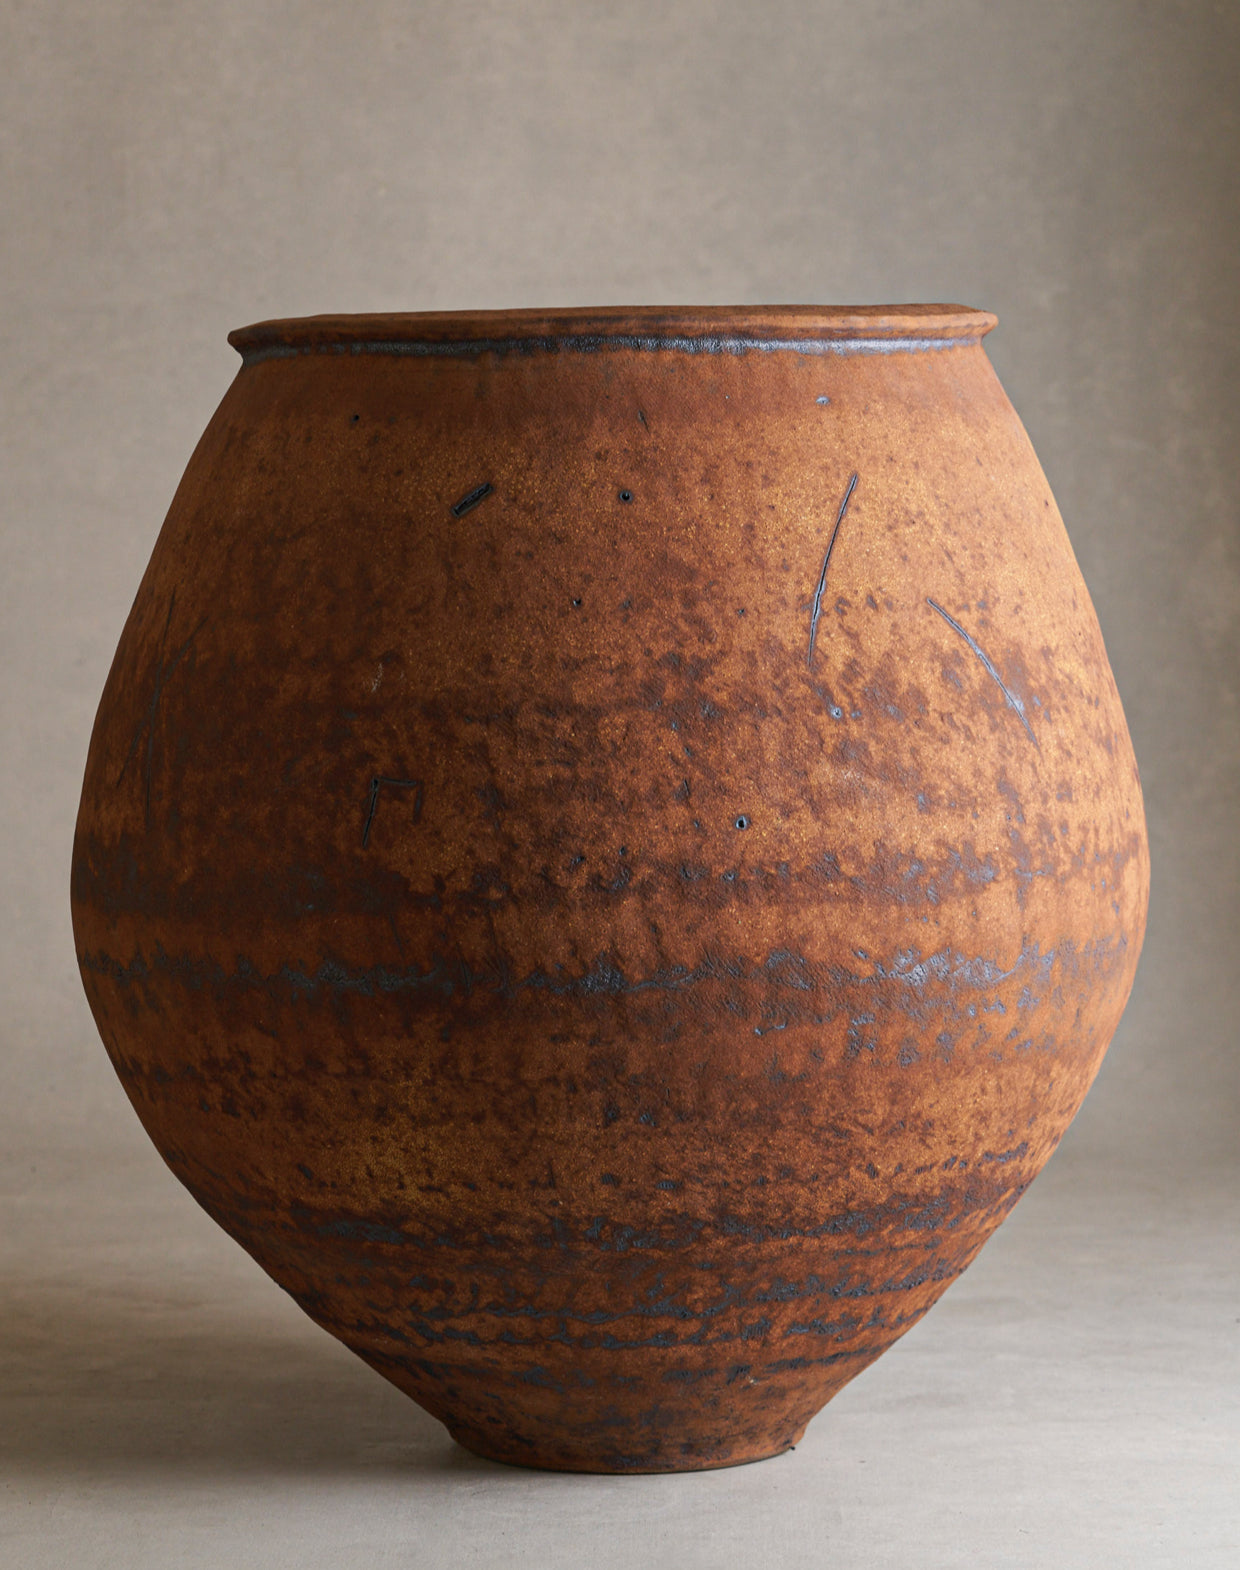 Rick Hintze Coiled Stoneware Vessel, "Untitled" No. 05